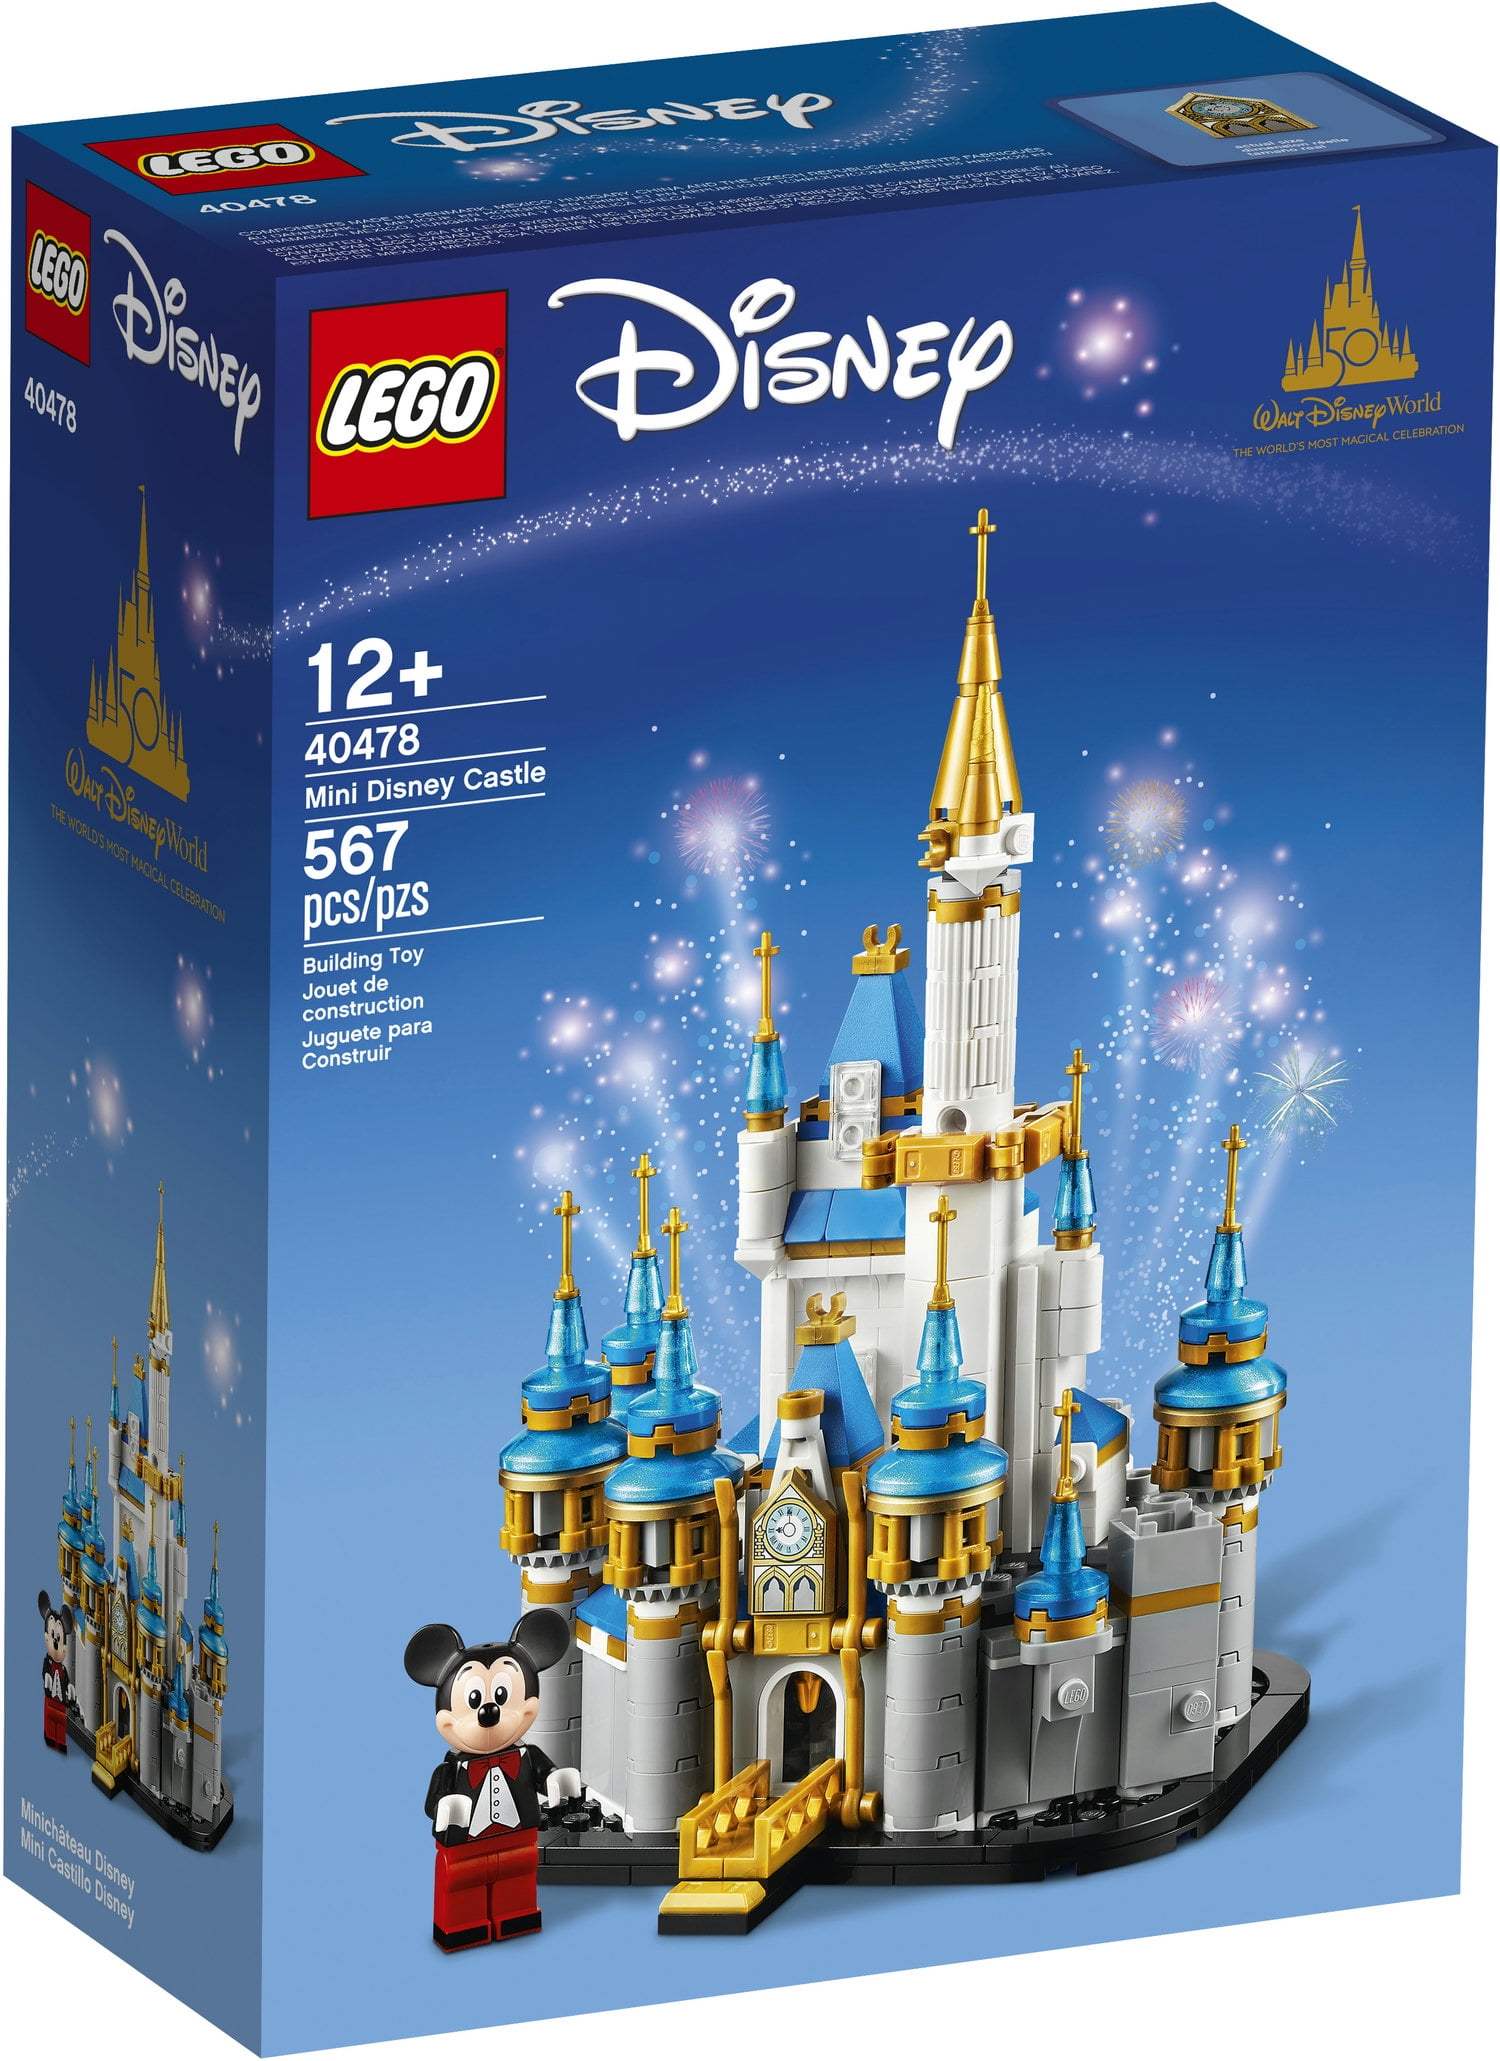 Moralsk Nebu Bane LEGO Mini Disney Castle 40478 Building Set (567 Pieces) - Walmart.com